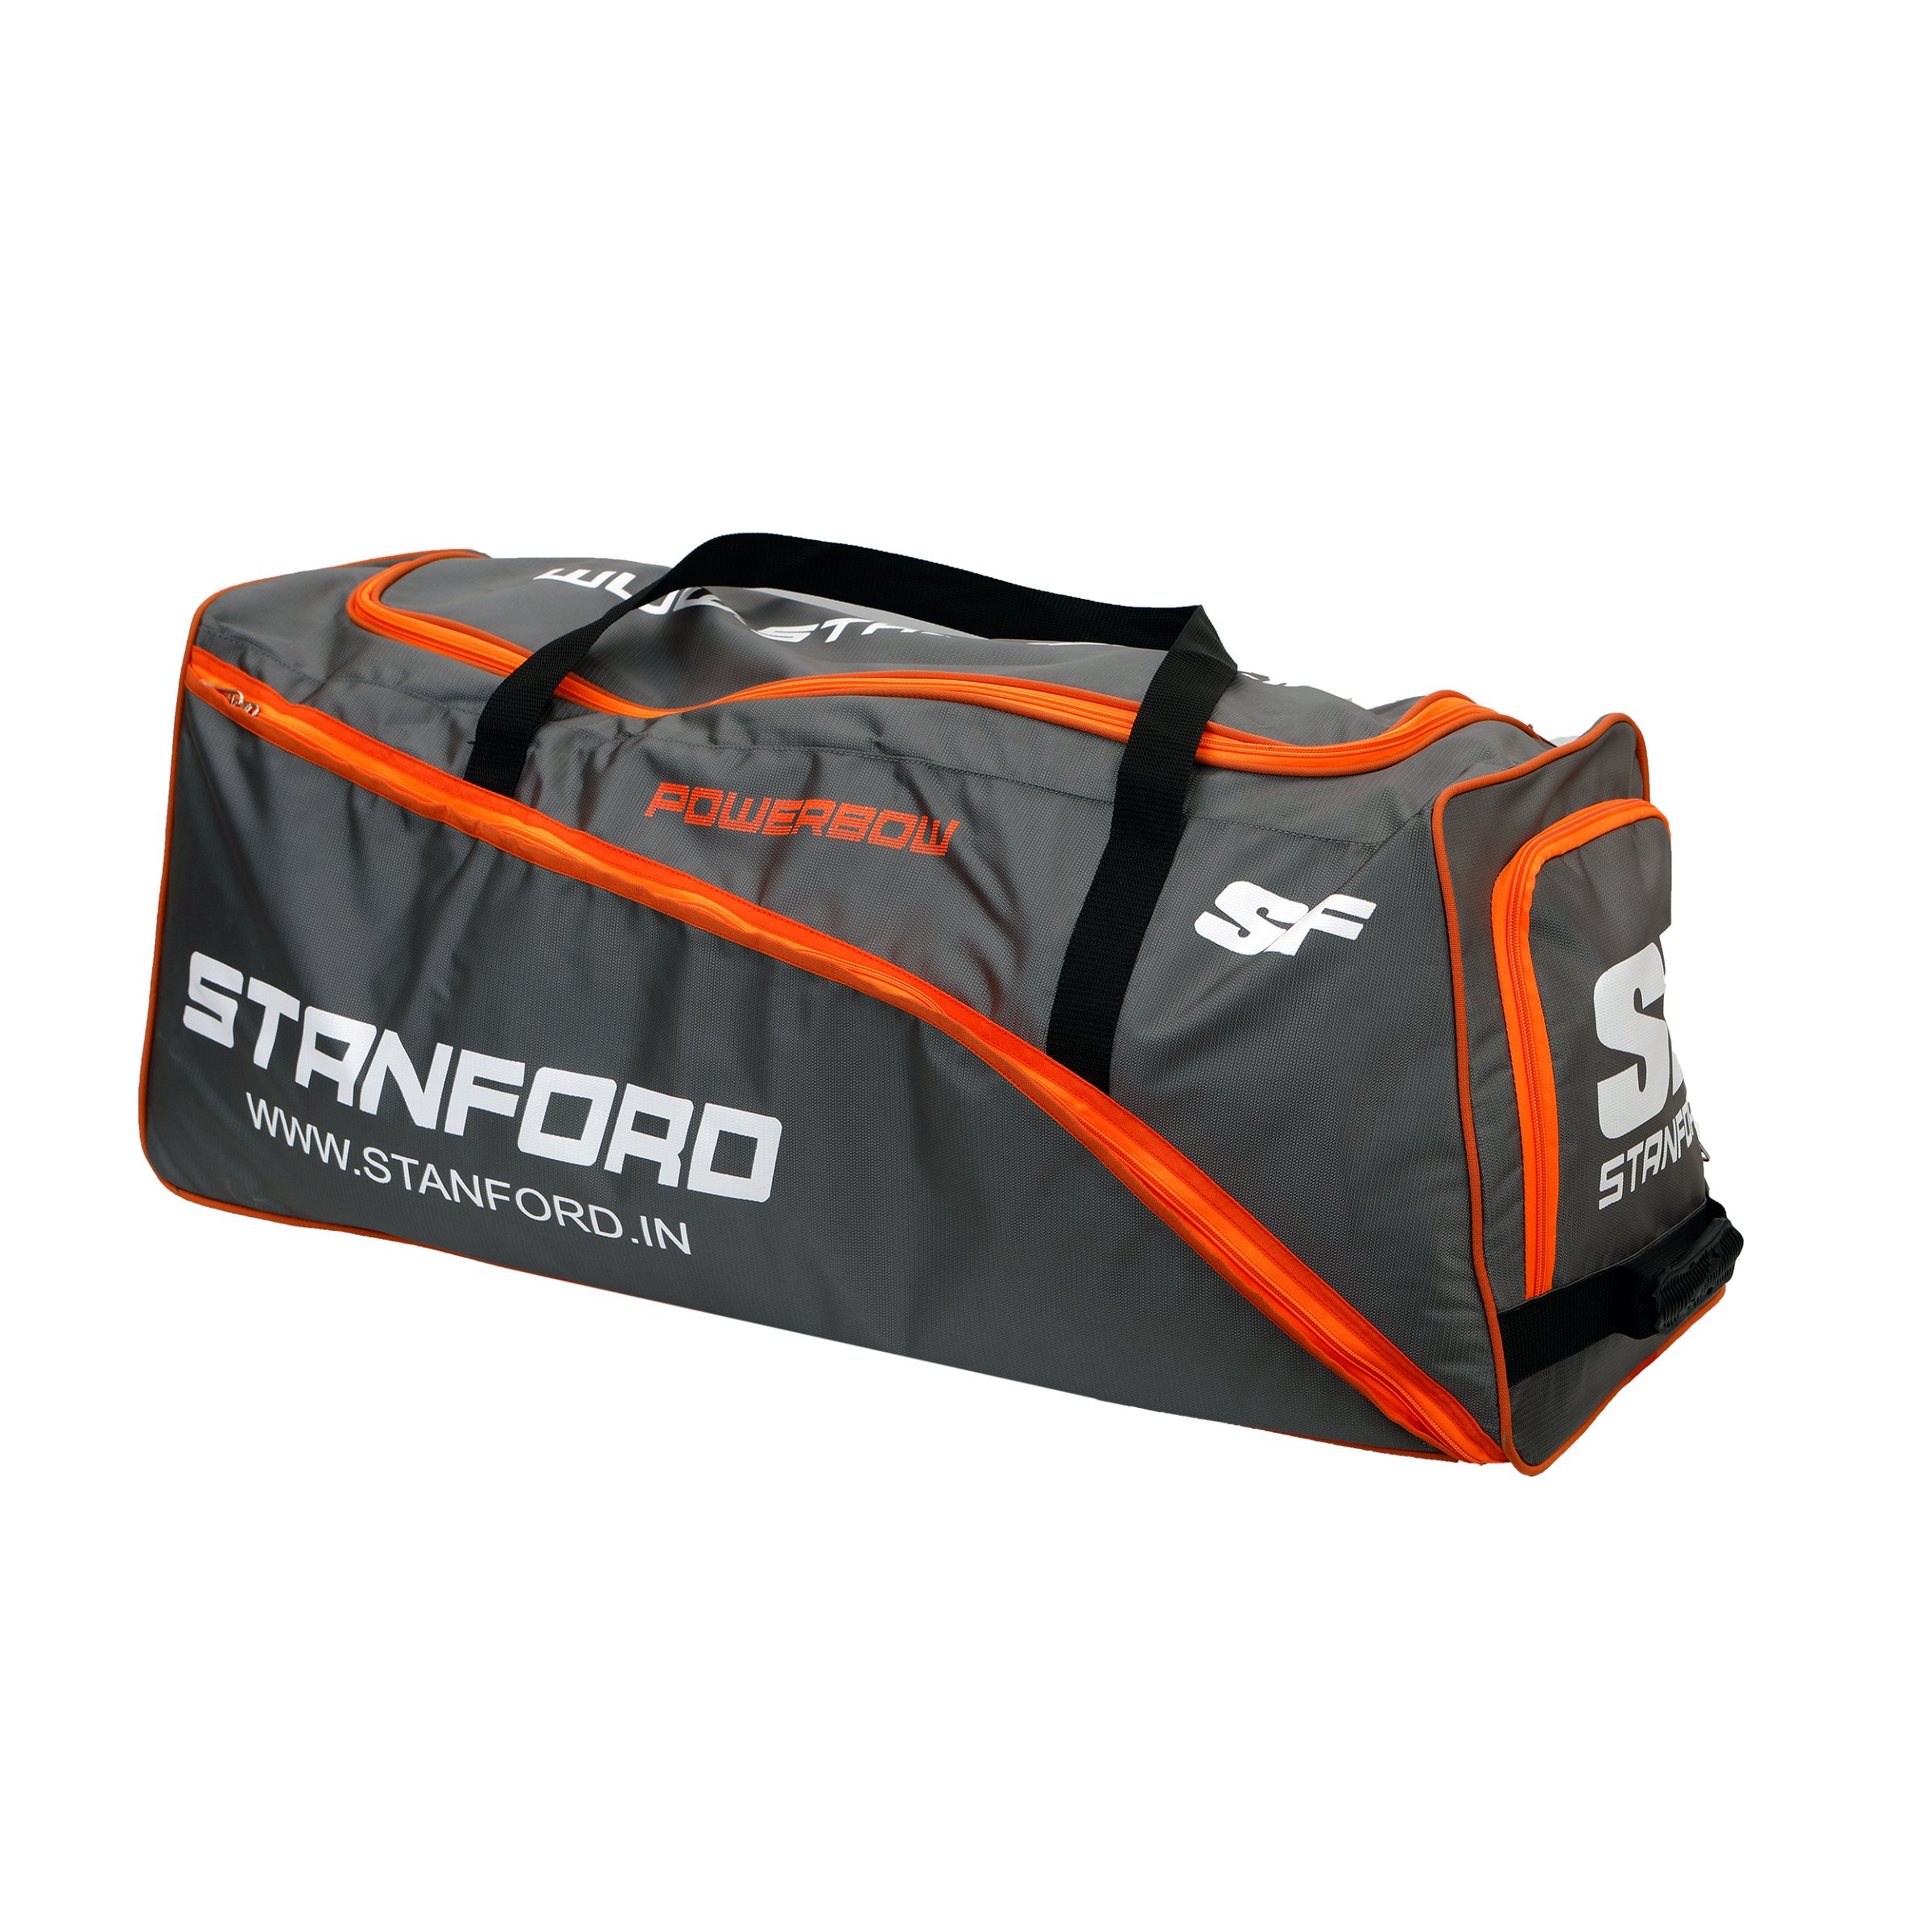 Buy SS Professional Cricket Kit Bag Online